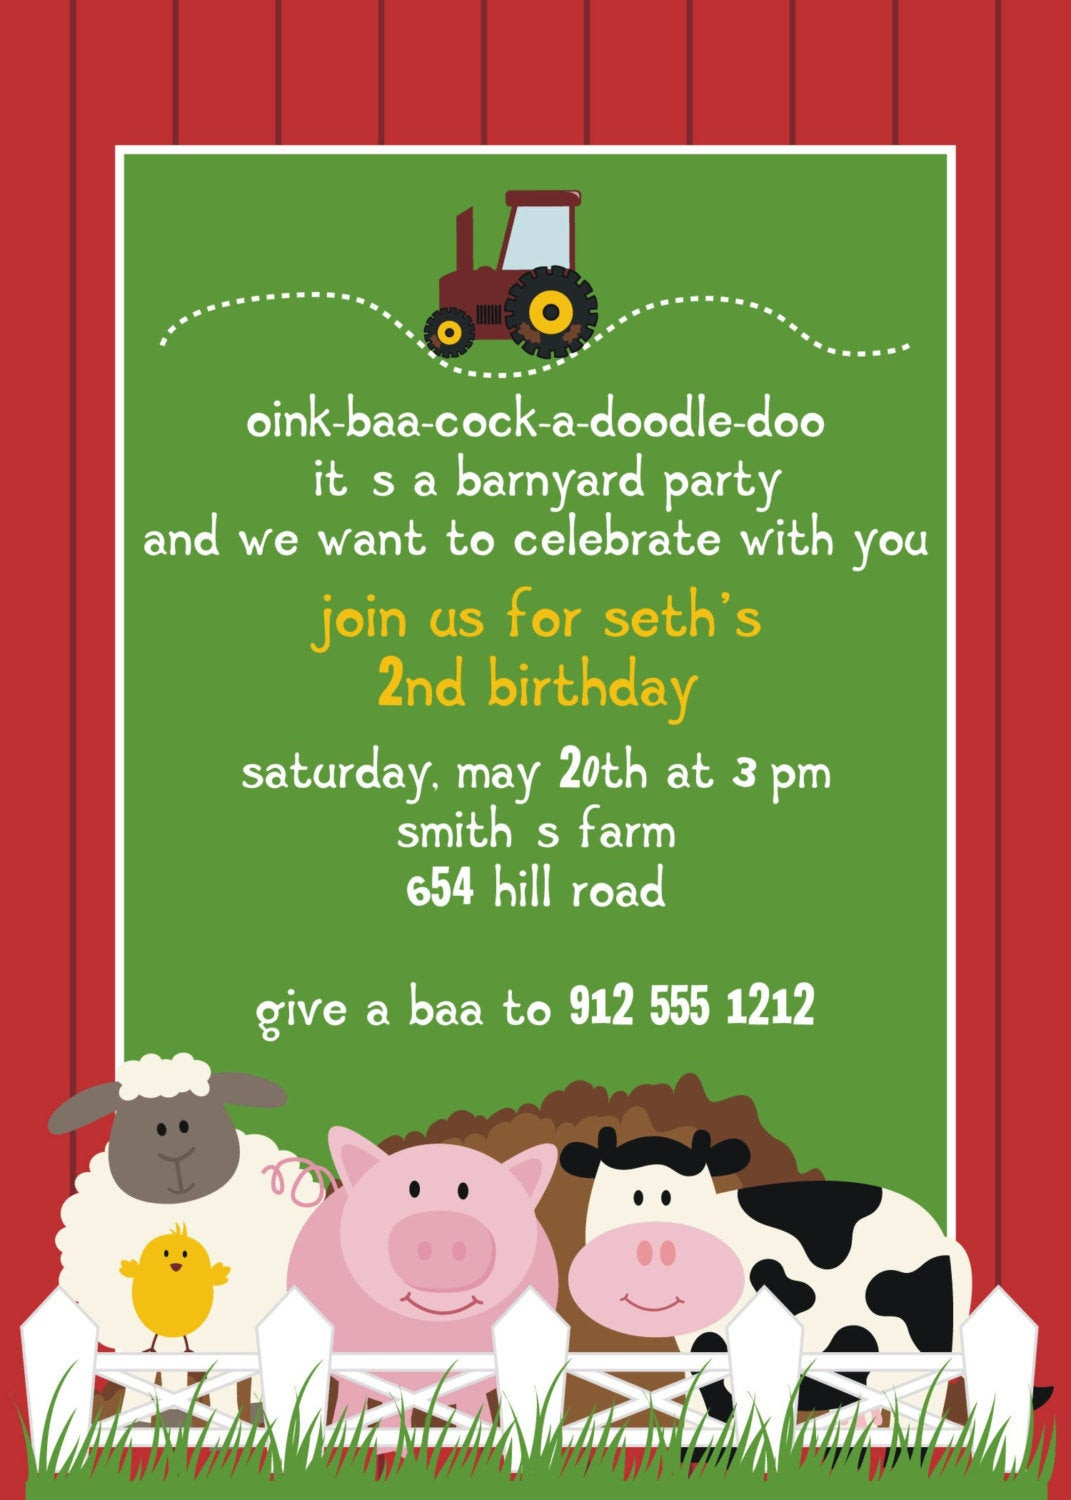 Best ideas about Animal Birthday Invitations
. Save or Pin Farm Animal Birthday Party Invitation Now.